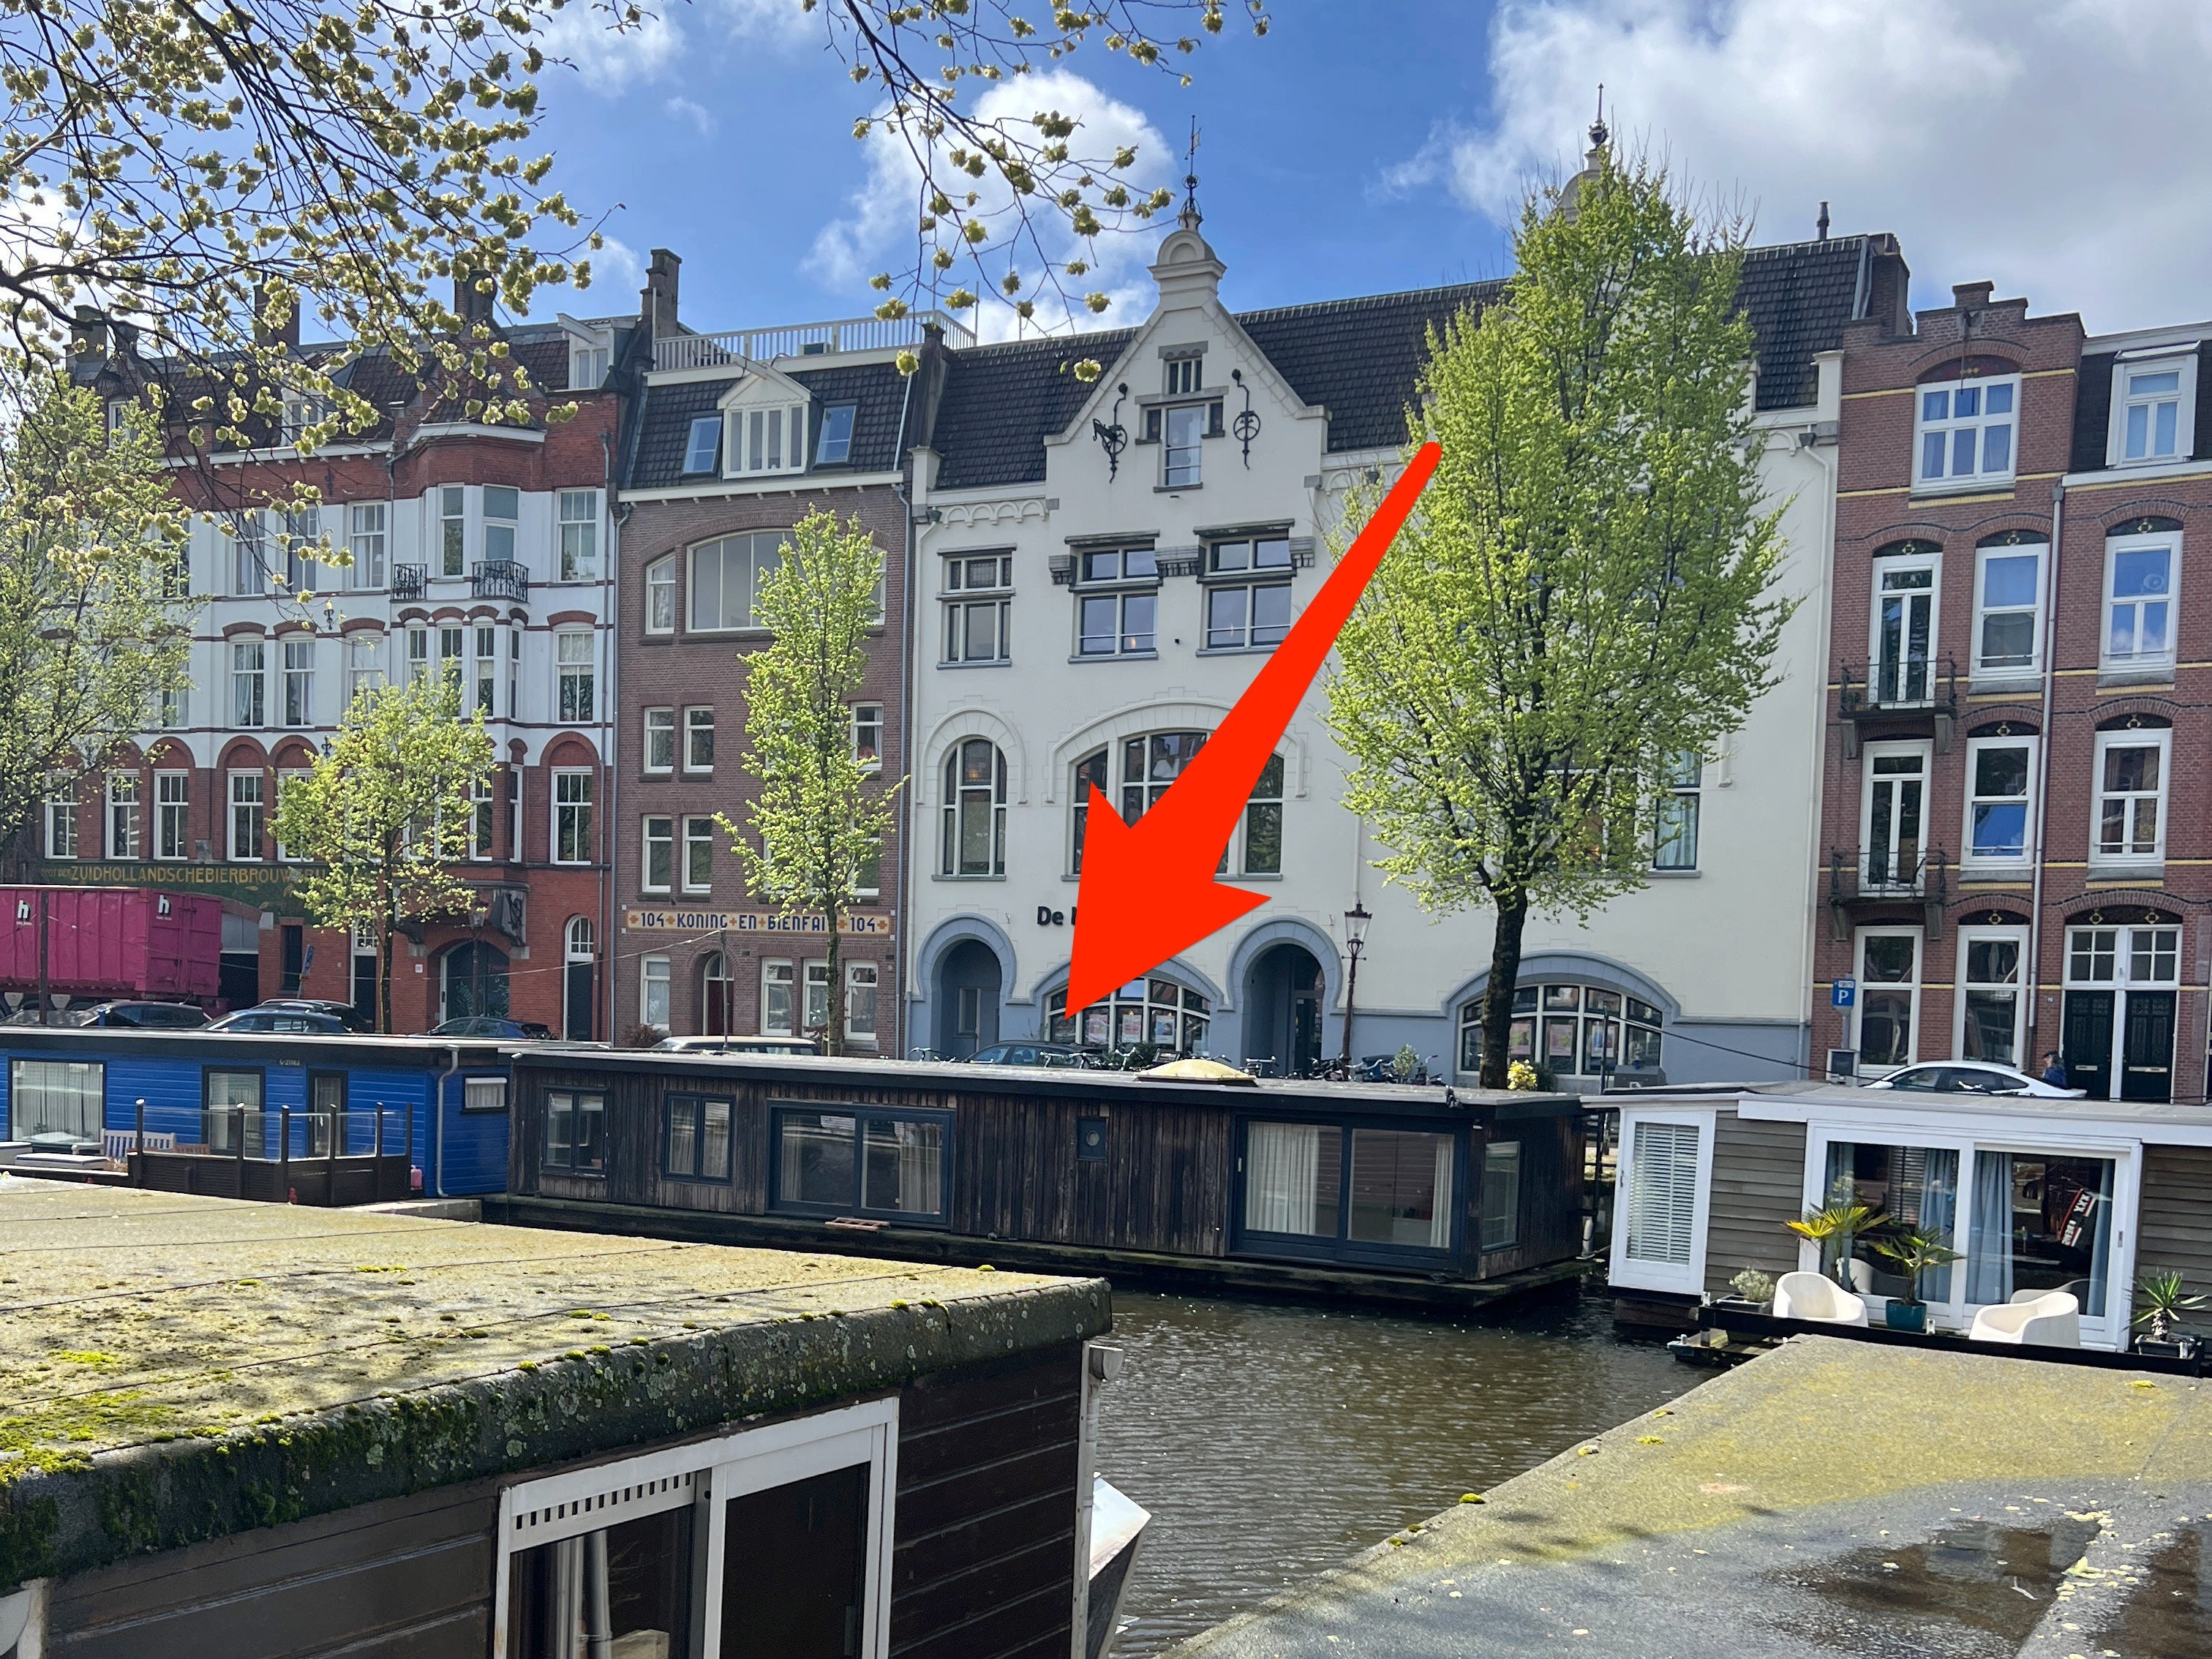 boat trip amsterdam price